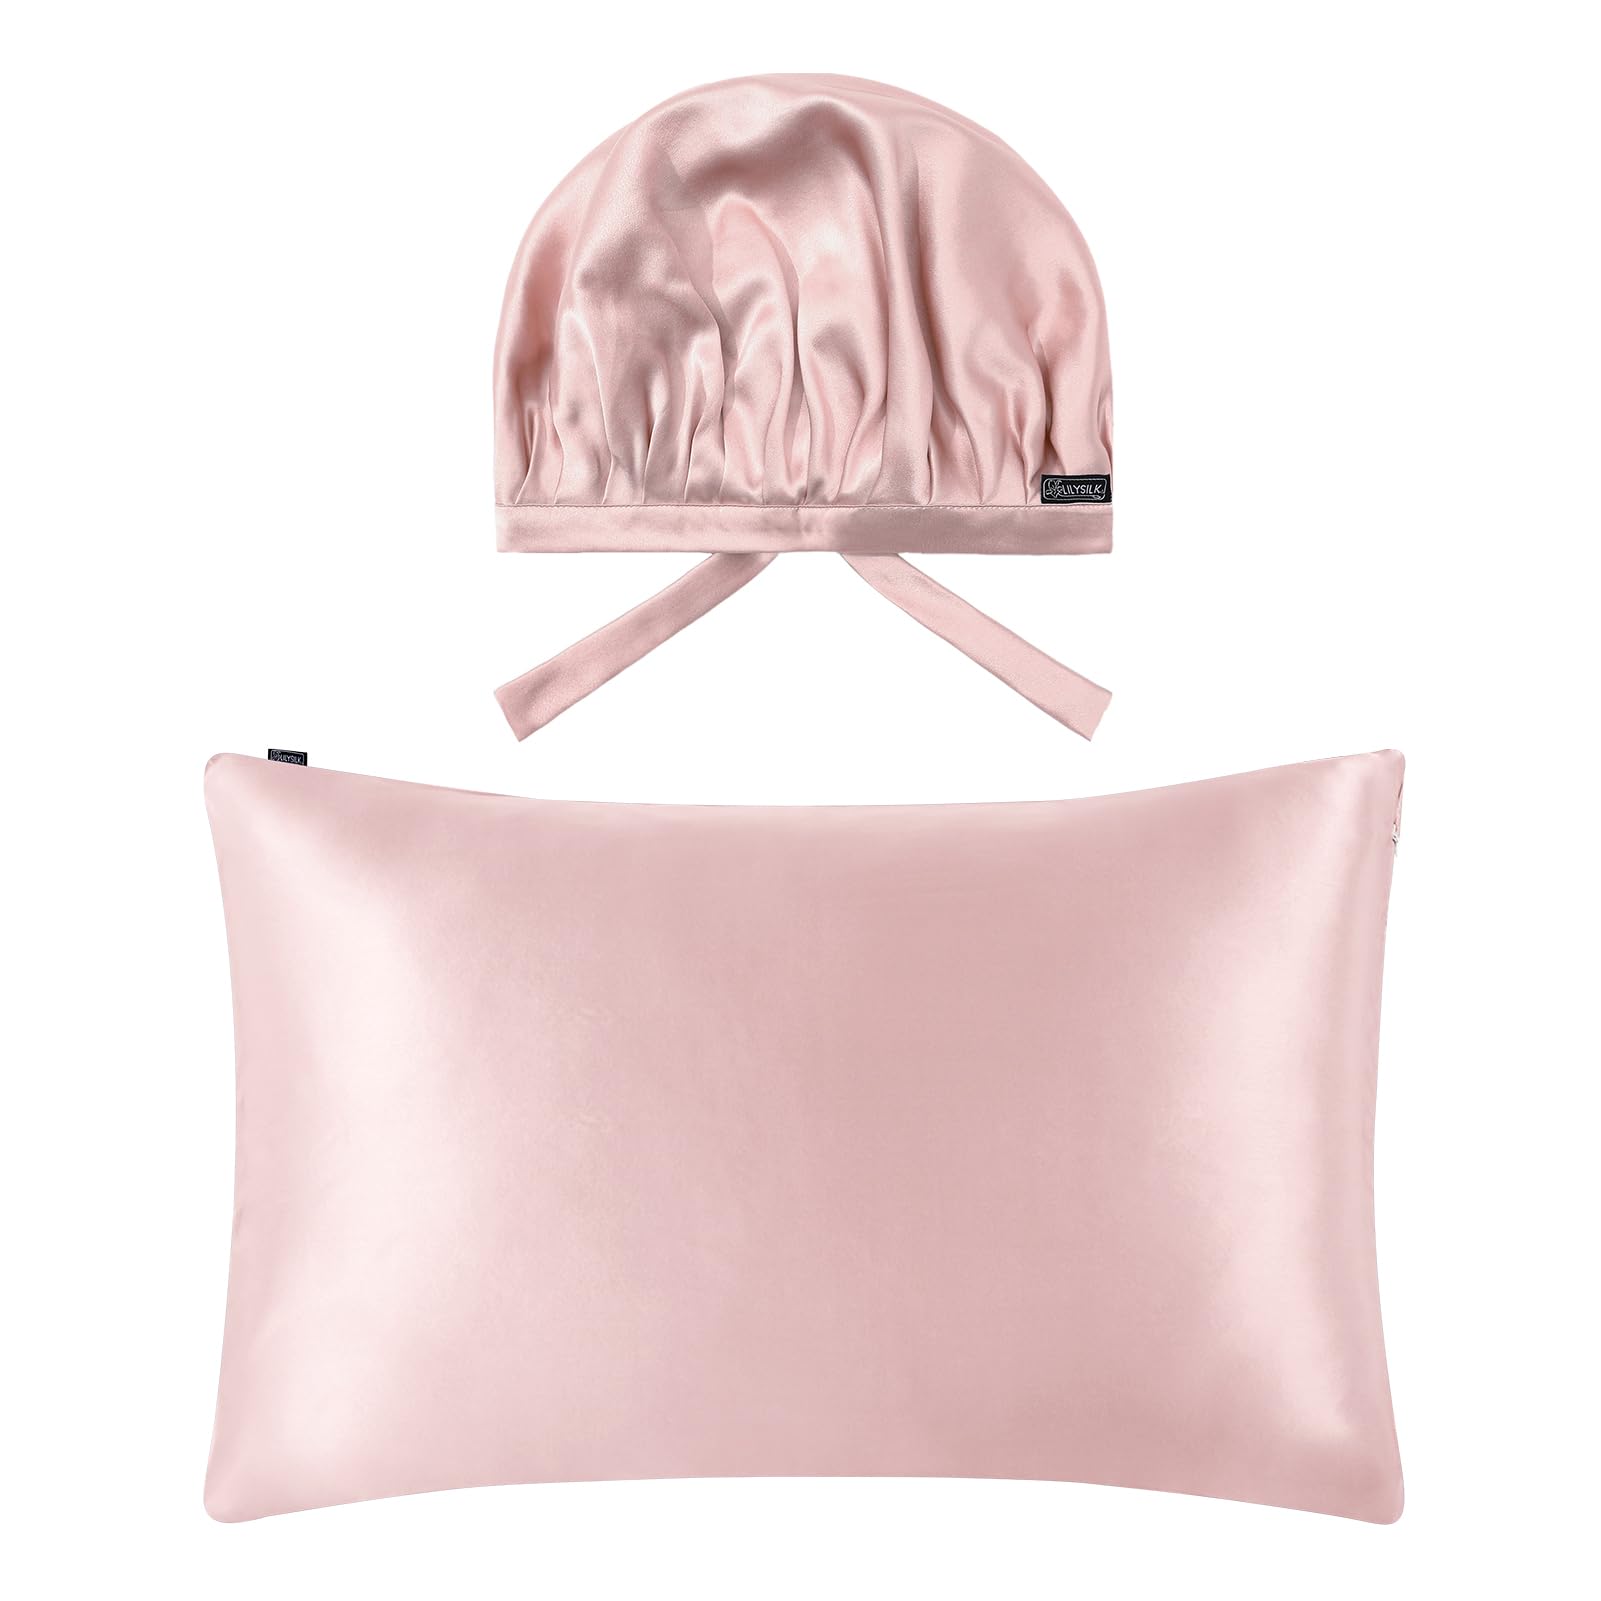 LilySilk 100% Silk Bonnet with Adjustable Elastic Band, Natural Silk Pillowcase with Hidden Zipper Closure, 1PC, Rosy Pink